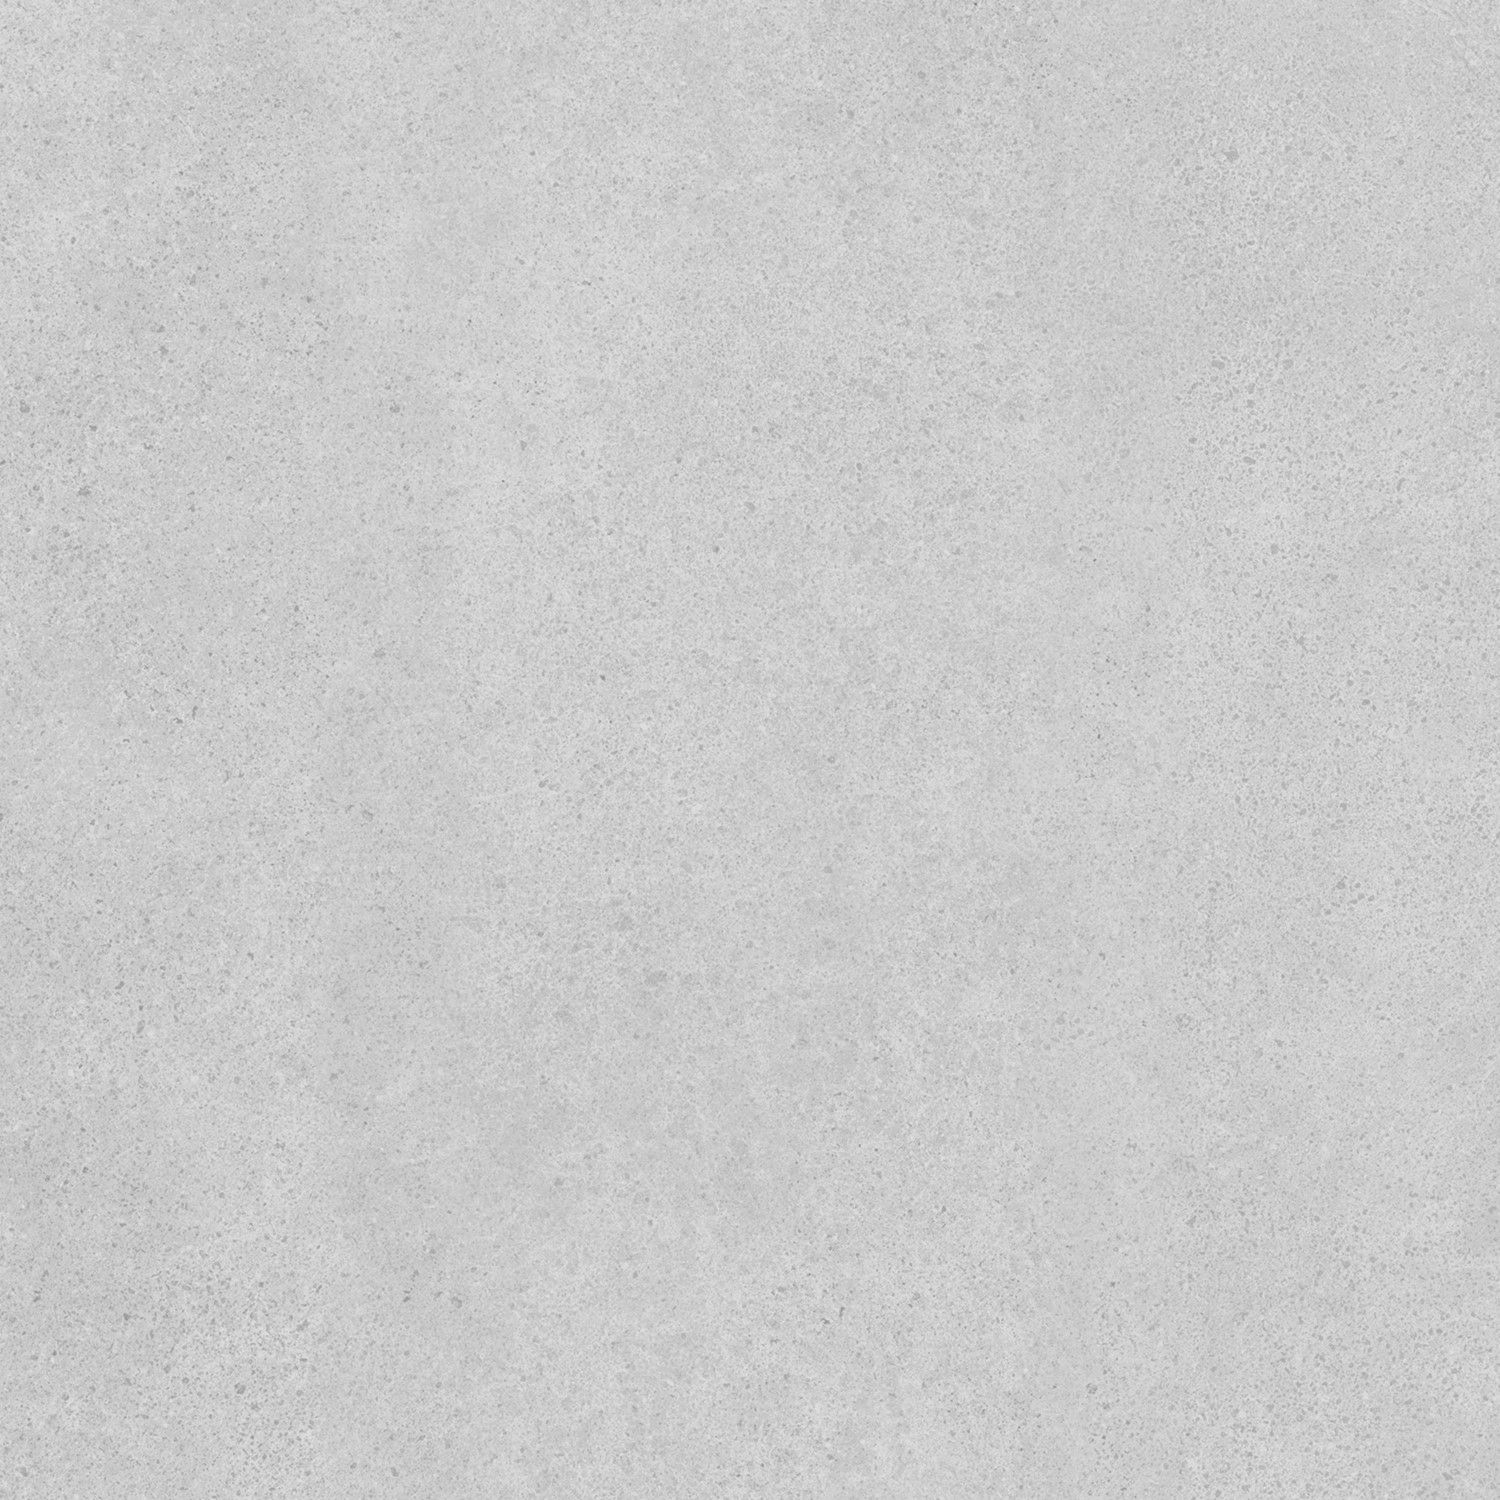 Плитка Kerama Marazzi Milano Безана SG457900R серый светлый обрезной 50,2x50,2x0,95 см плитка kerama marazzi milano порфидо sg402700n серый 9 9x40 2x0 8 см